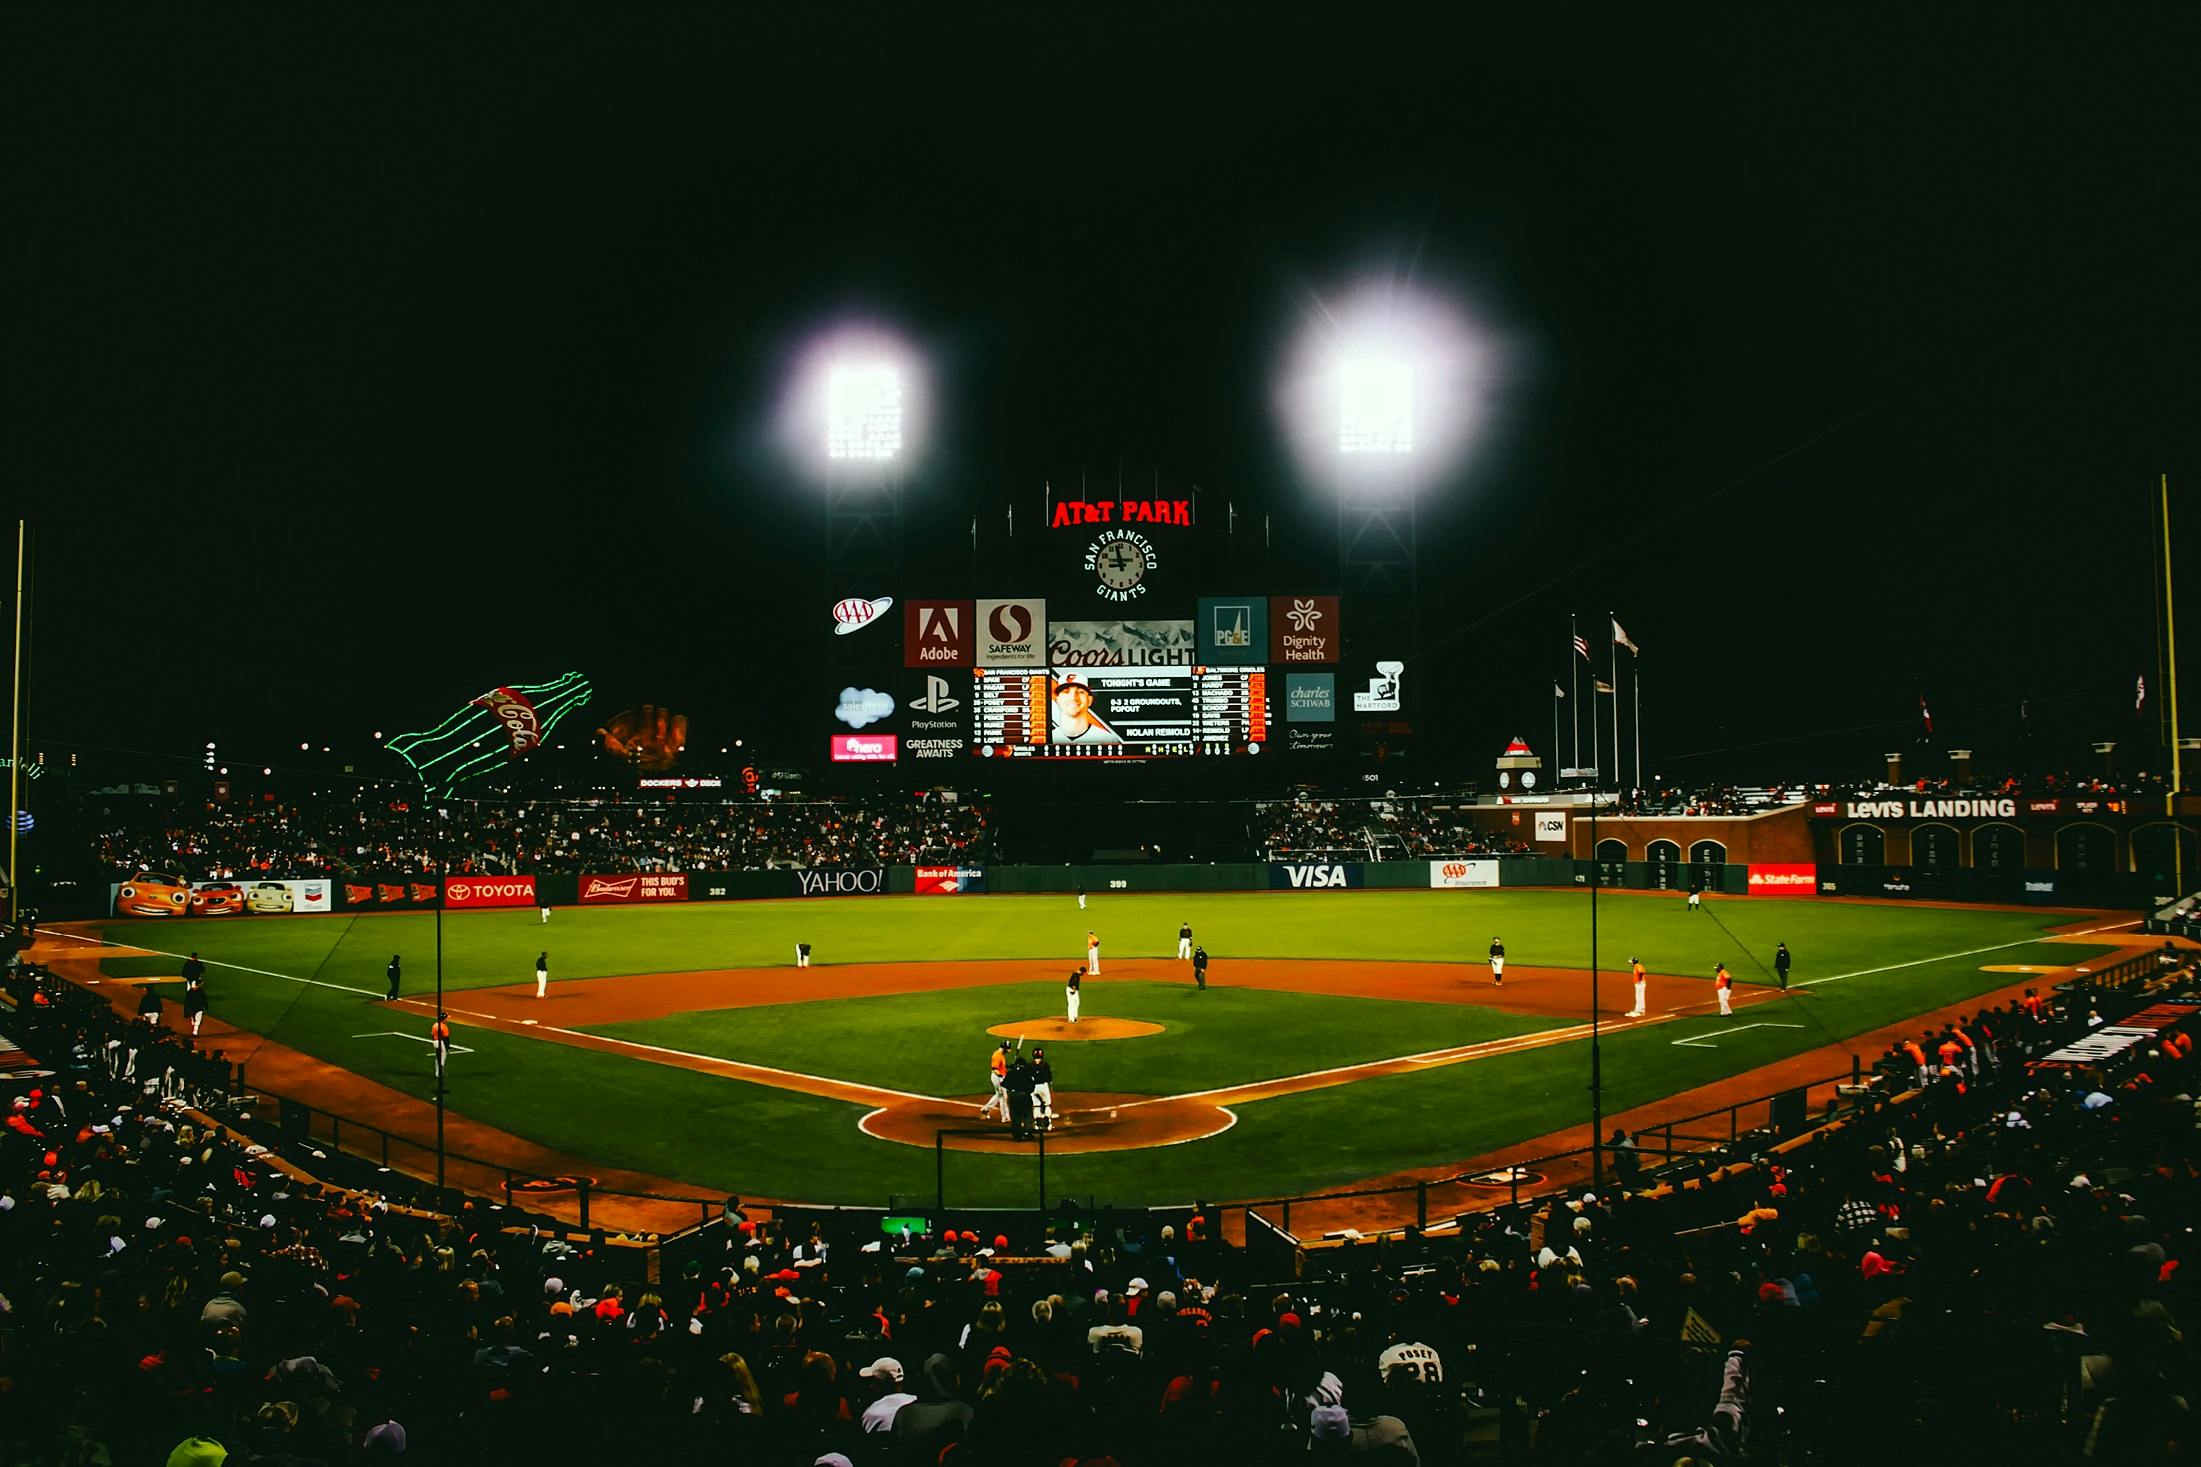 Download Free Baseball Stadium Wallpaper  PixelsTalkNet